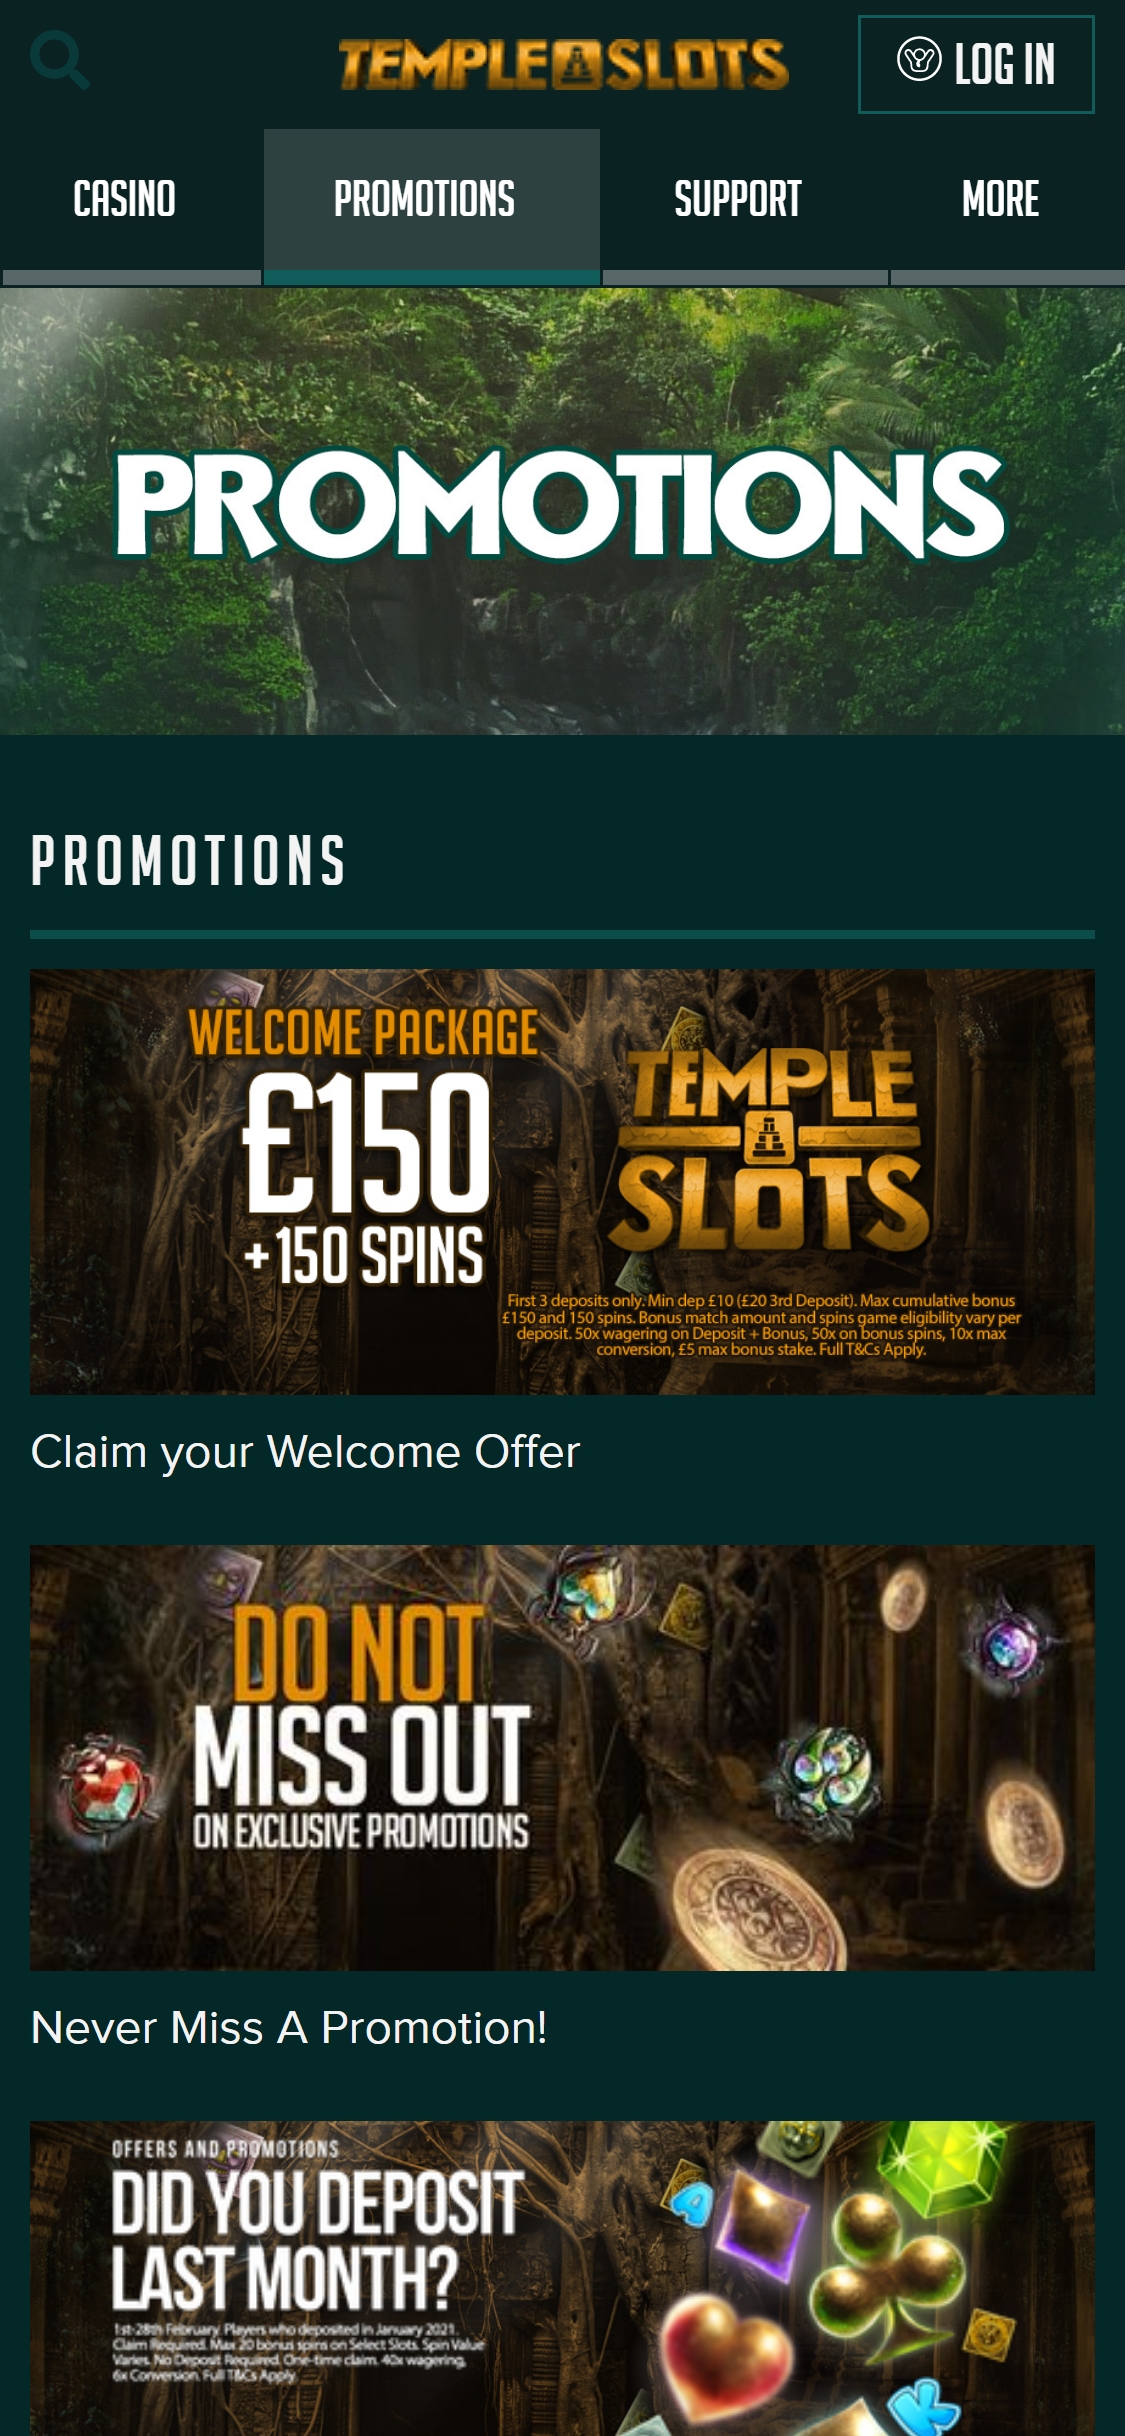 Temple Slots Casino Mobile No Deposit Bonus Review